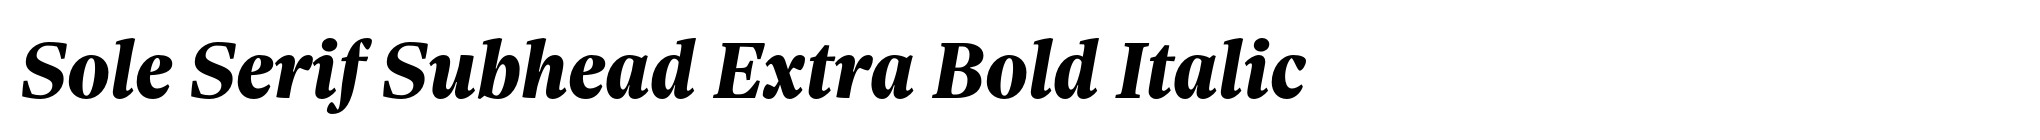 Sole Serif Subhead Extra Bold Italic image